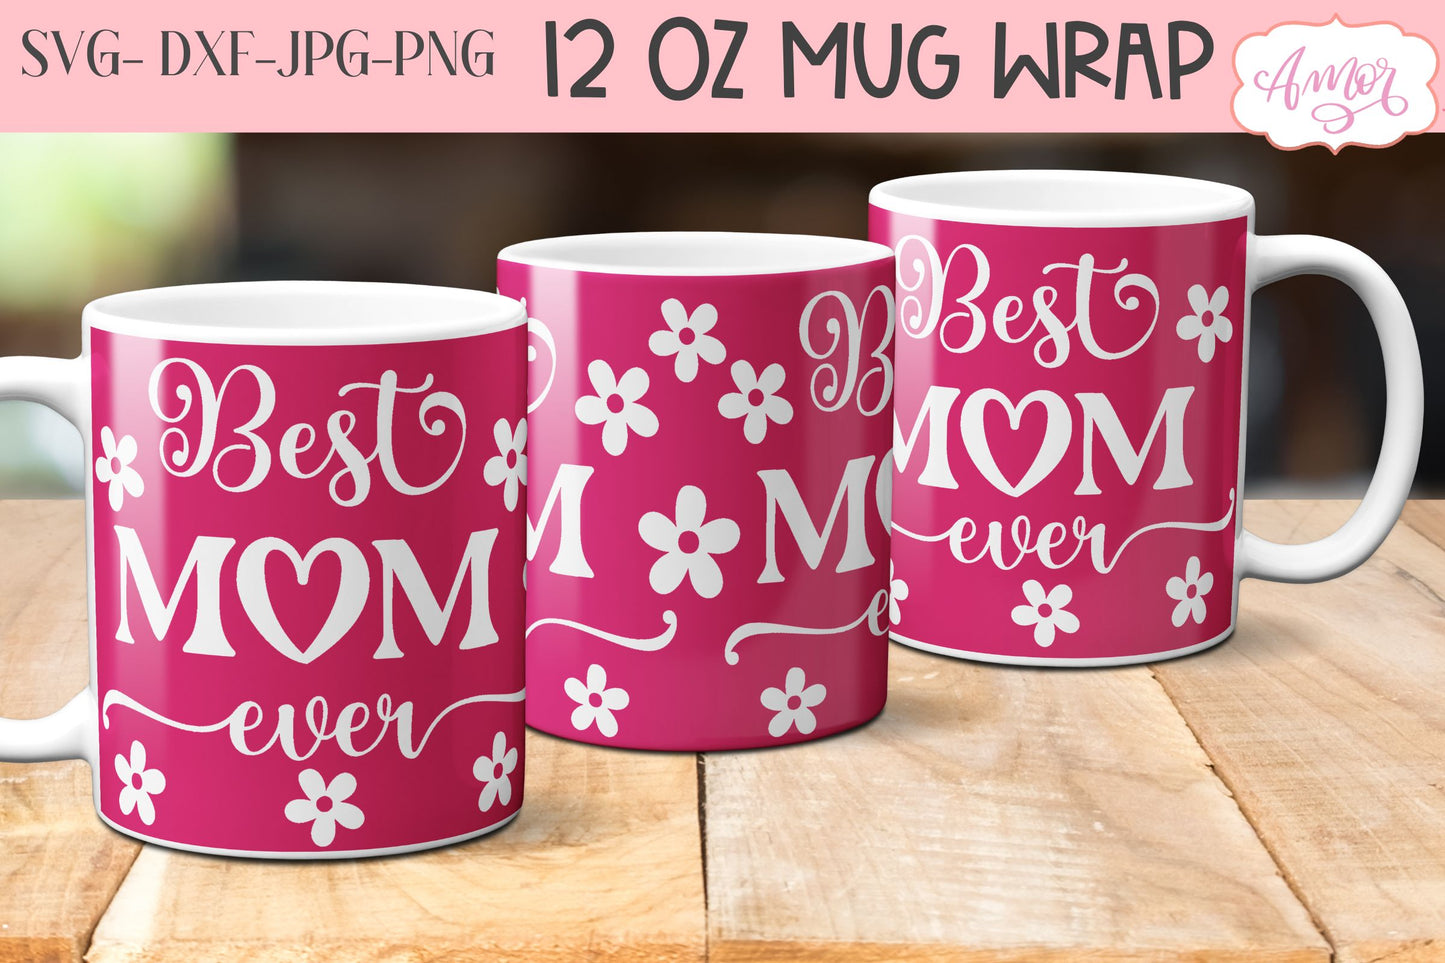 Best Mom Ever Mug Wrap SVG for Cricut infusible ink